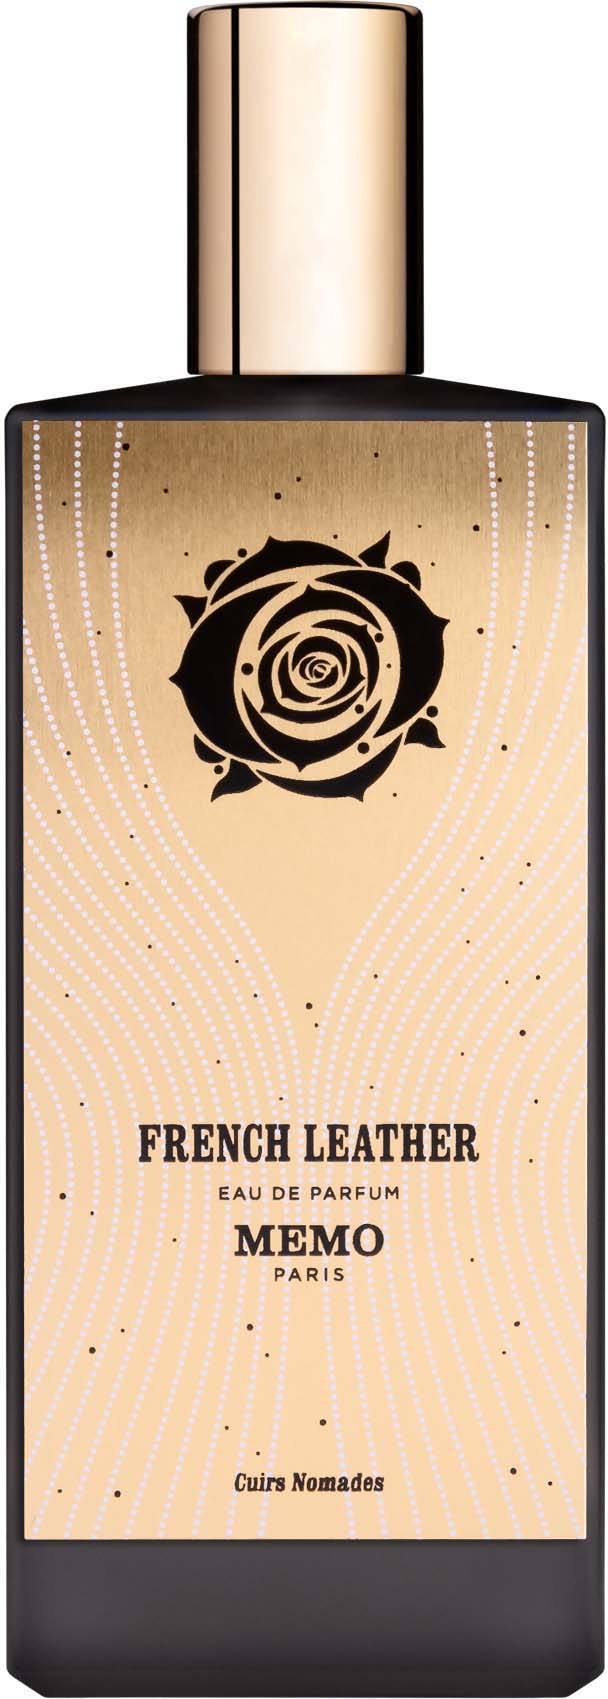 memo cuirs nomades - french leather woda perfumowana 75 ml   